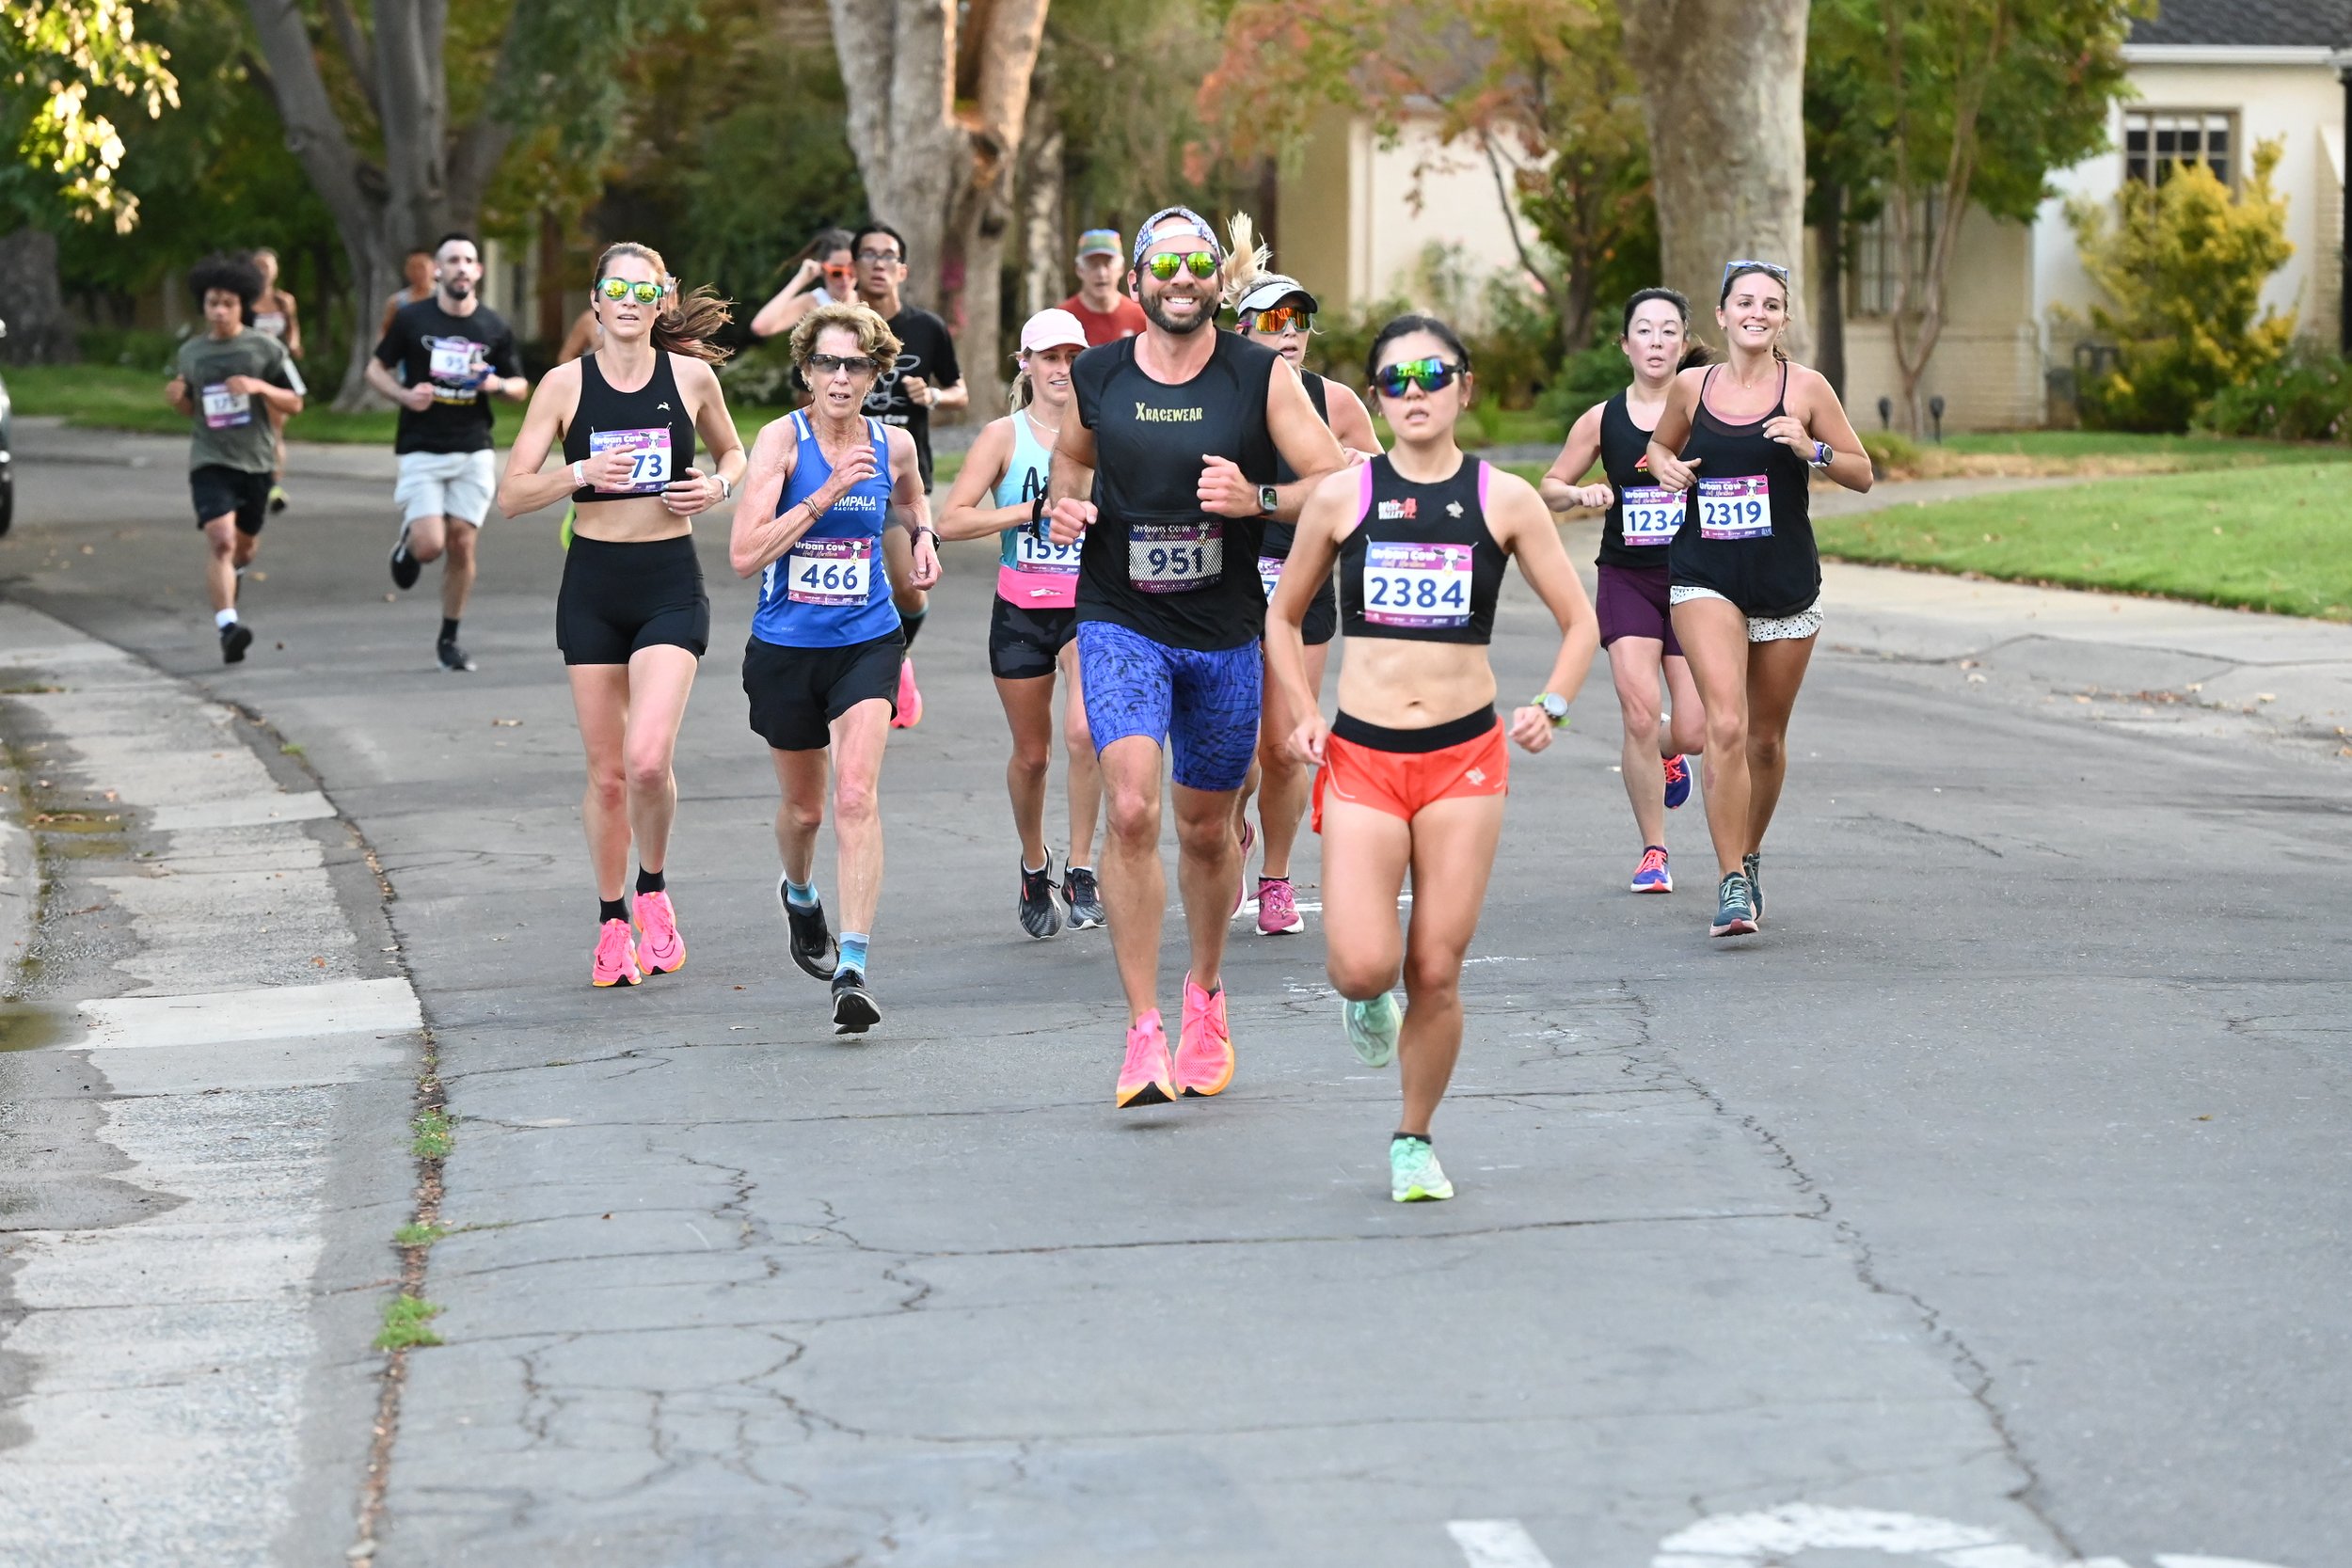 Runners in a road race for the Urban Cow half marathon in Sacramento, California